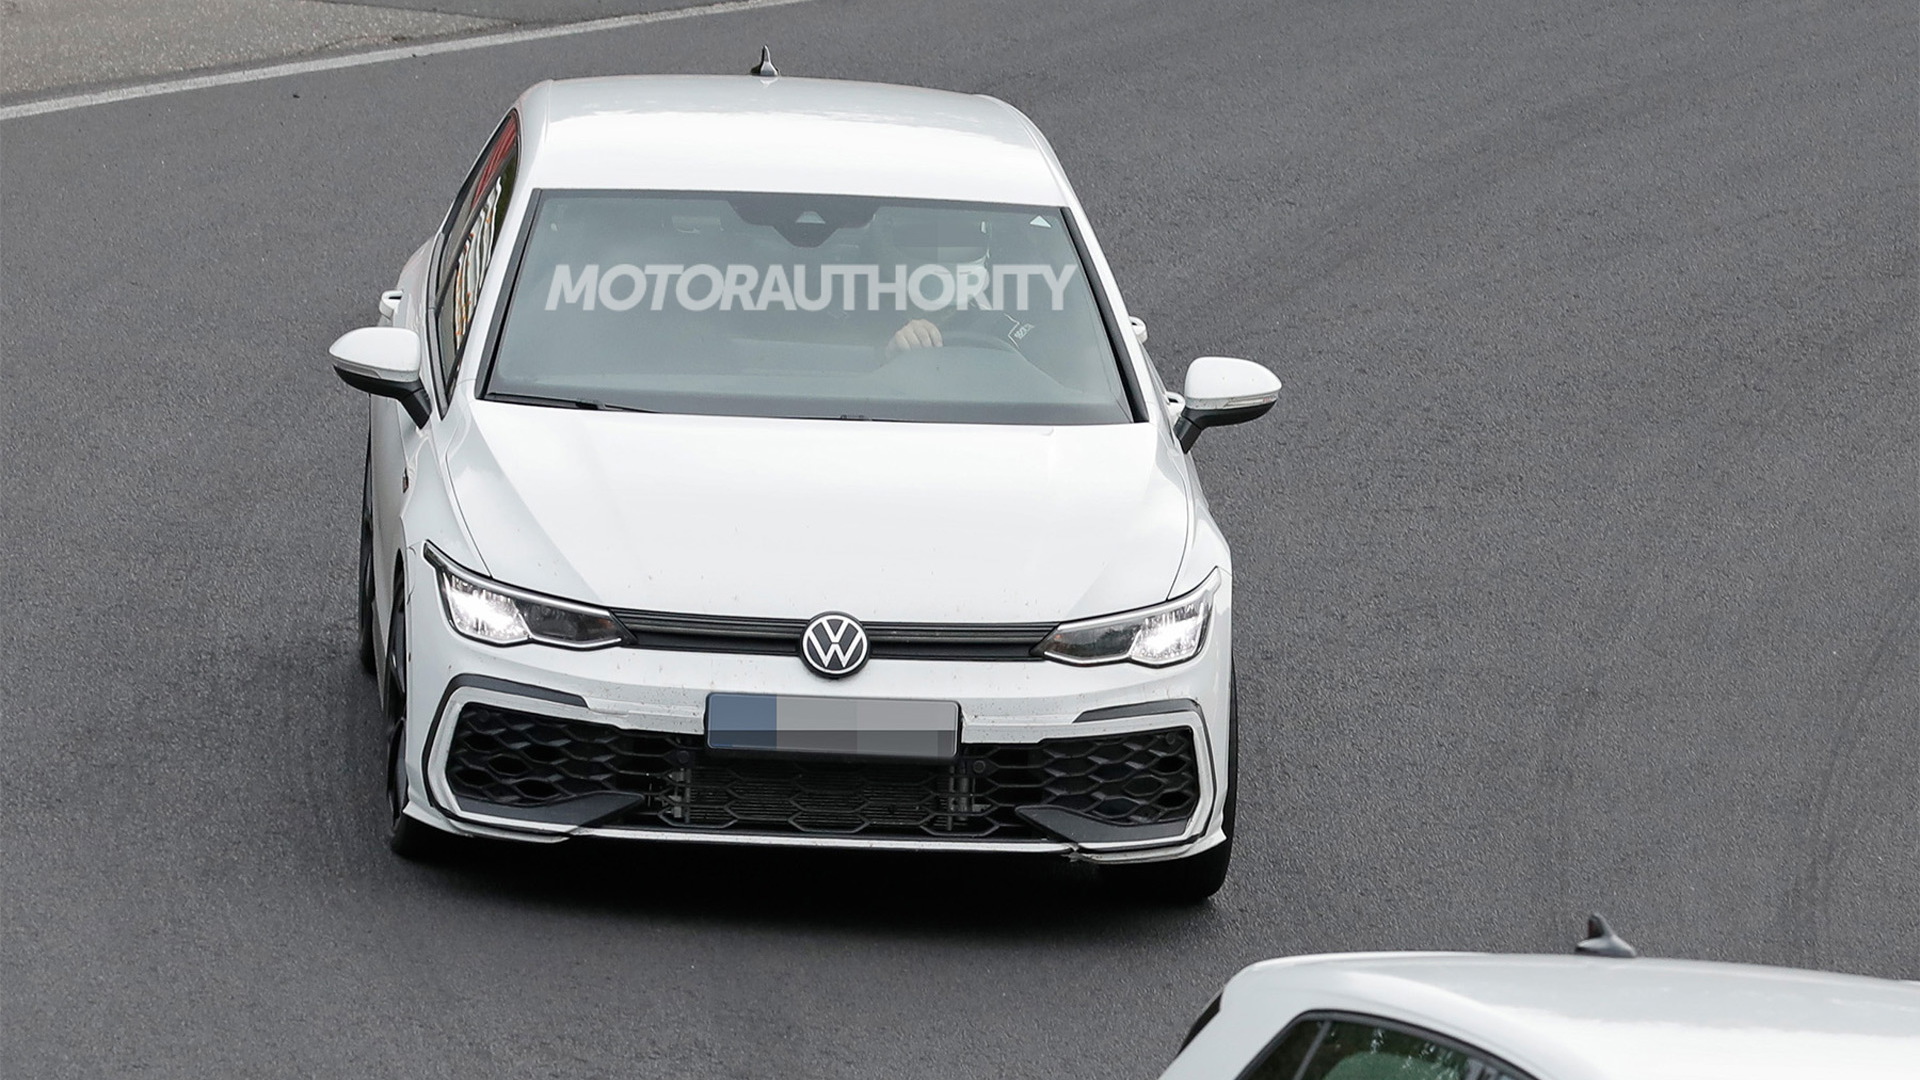 2025 Volkswagen Golf GTI facelift spy shots - Photo credit: Baldauf